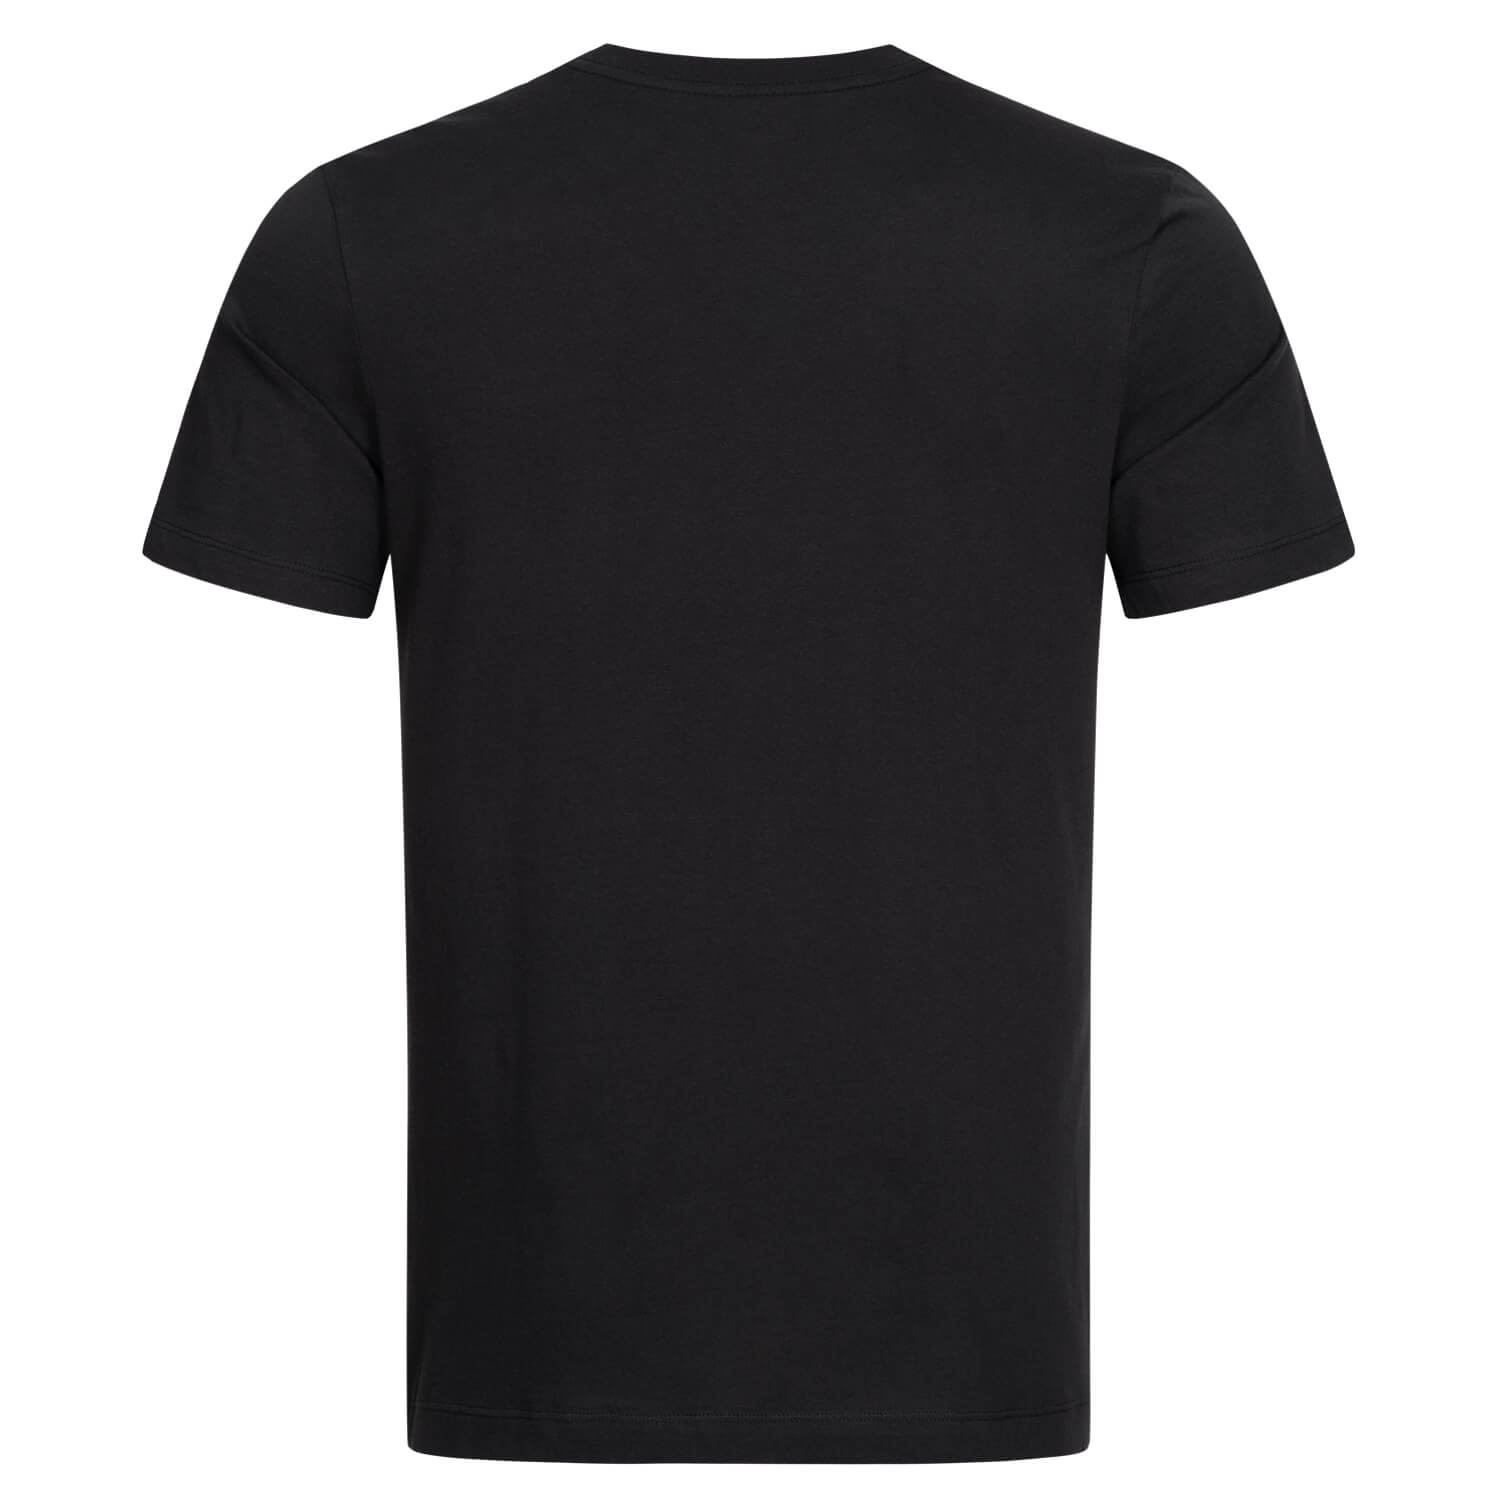 Bild 2: Nike T-Shirt 23 schwarz